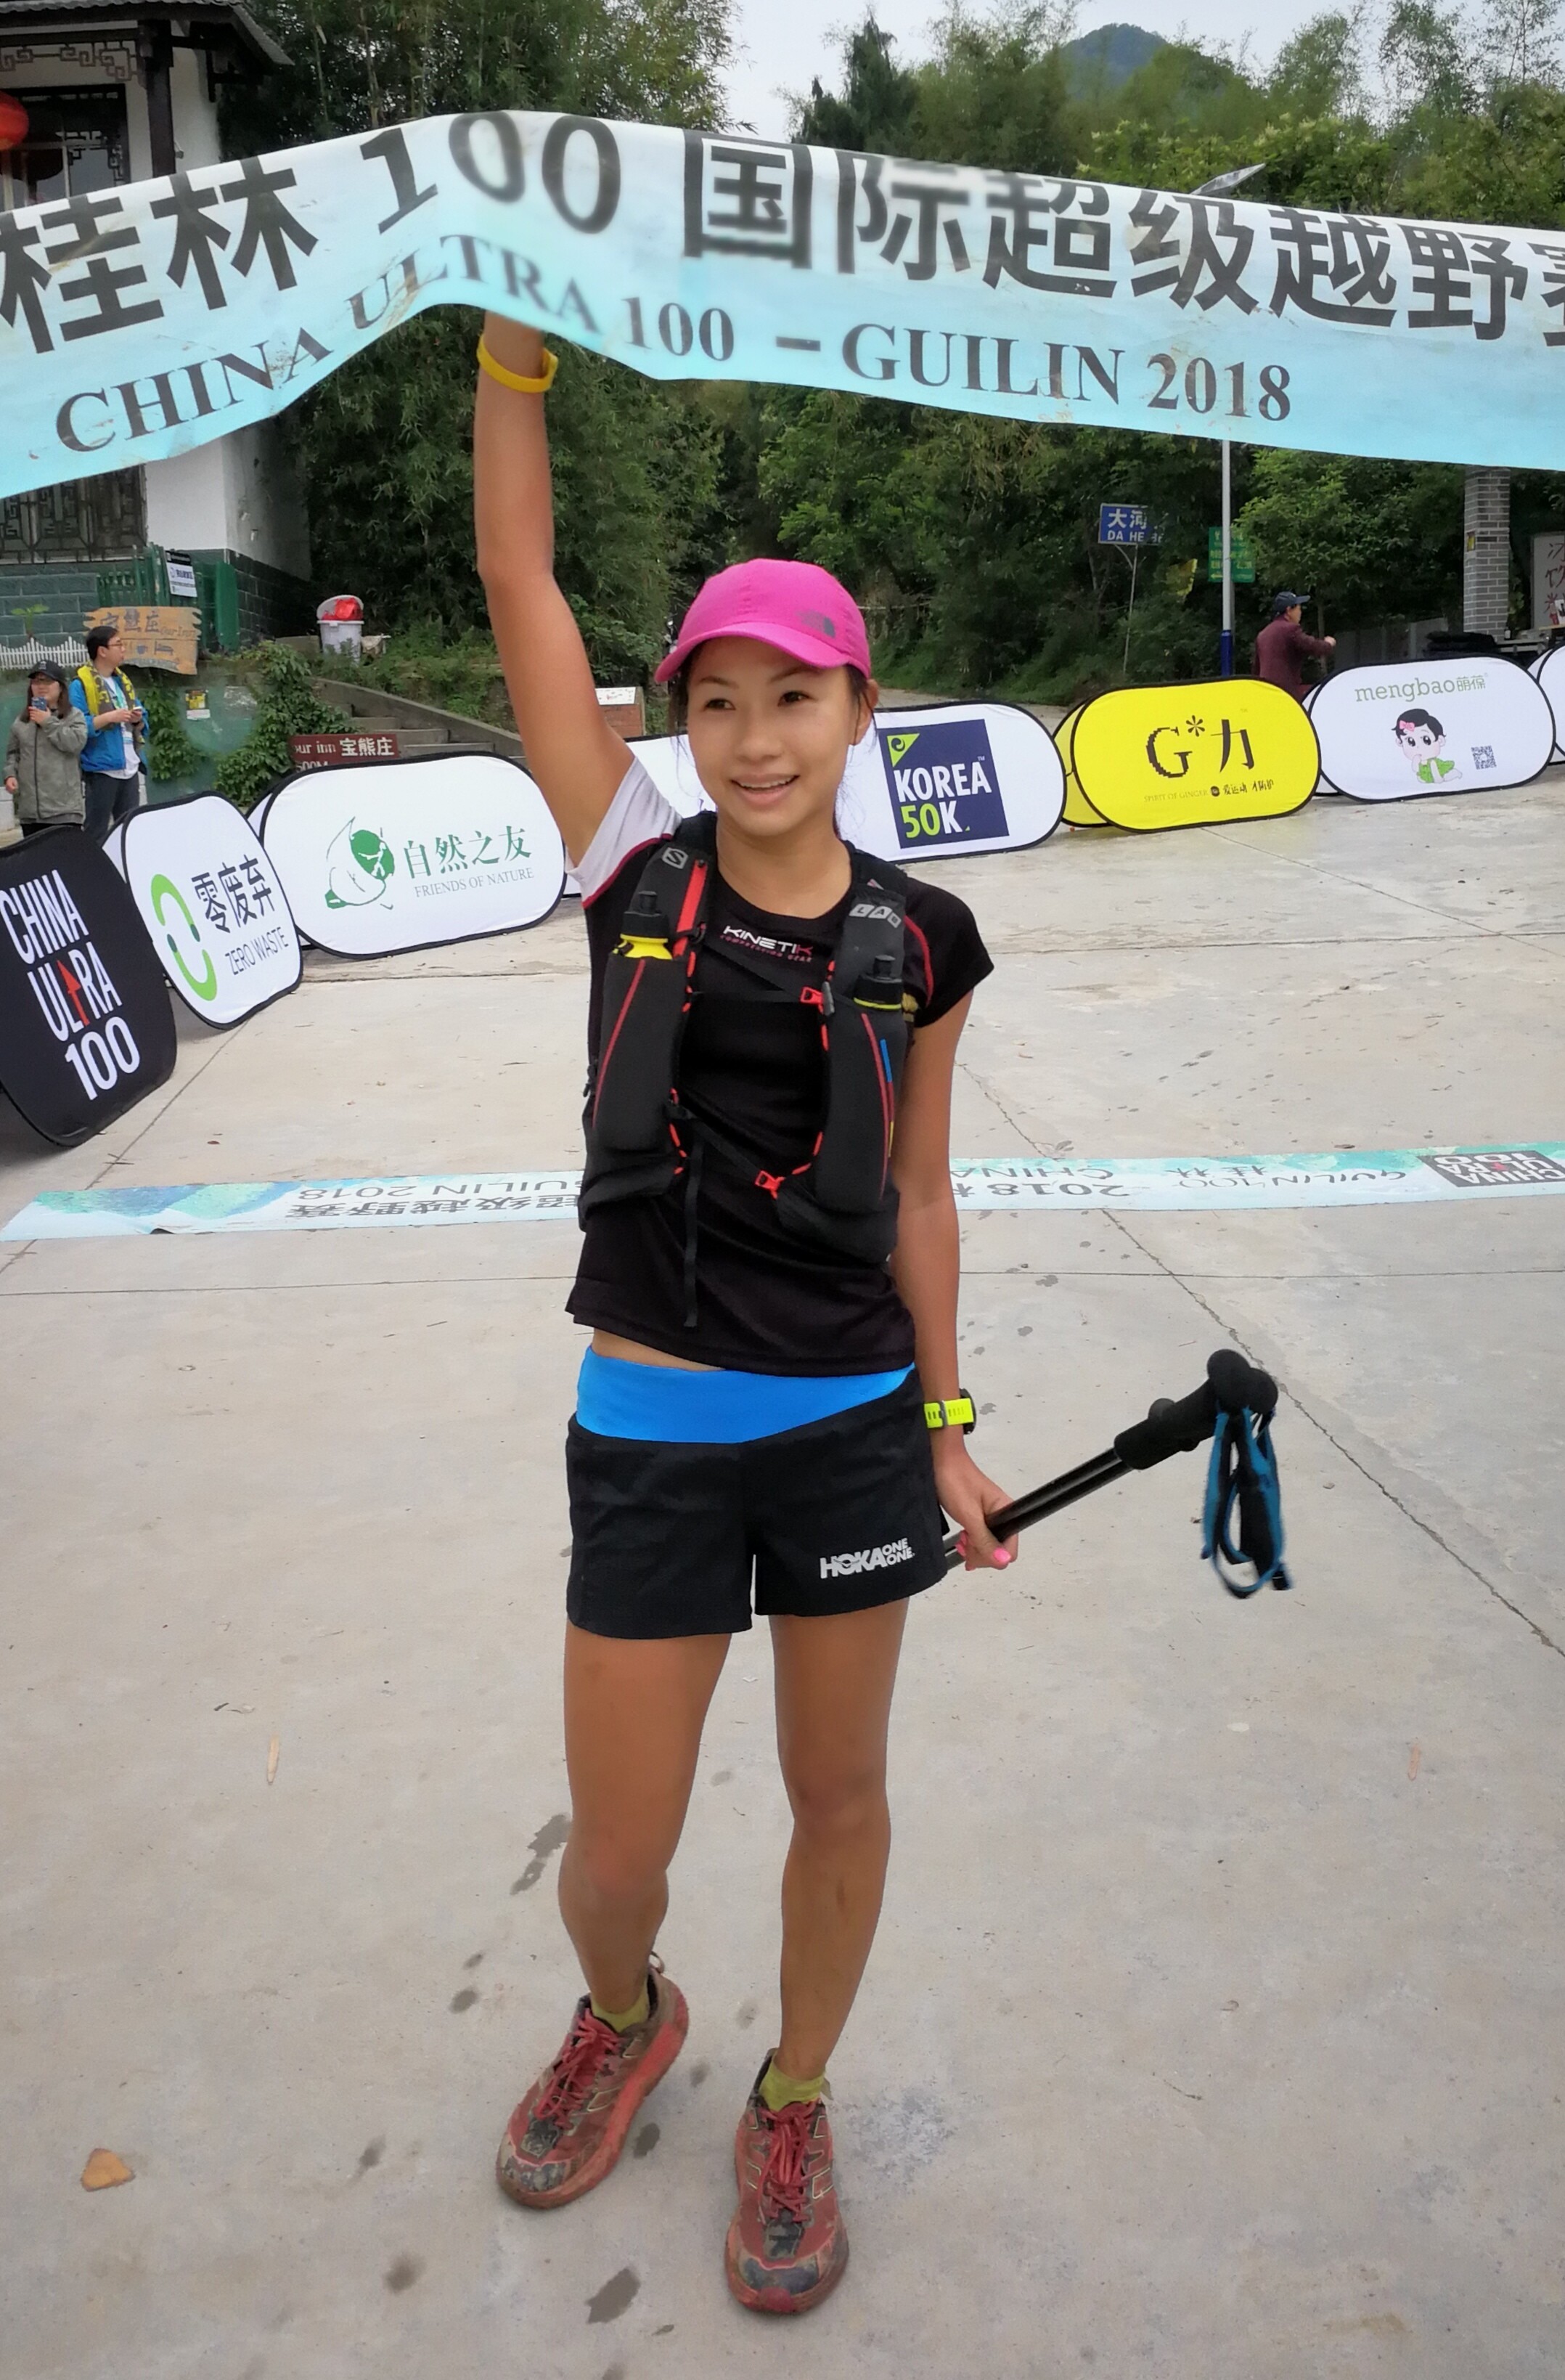 Samantha Chan wins the 70k China Ultra 100 despite losing her way. Photo: Handout